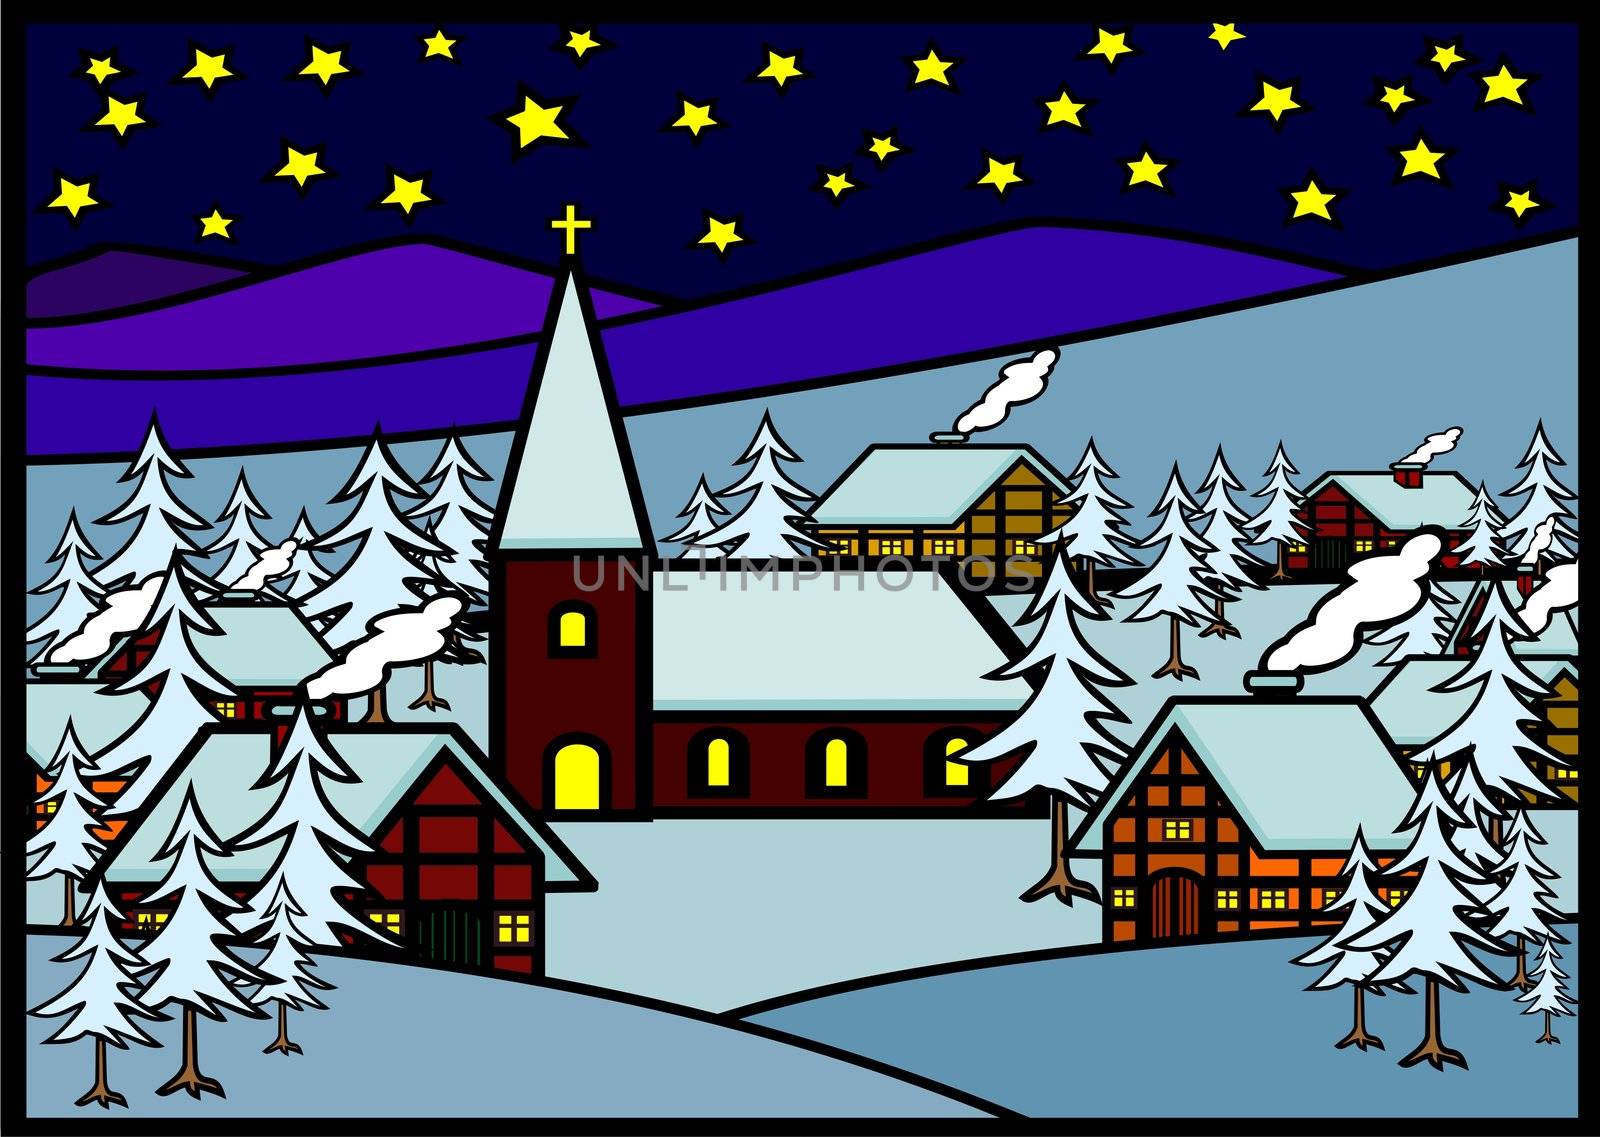 Christmas Village in a Snowy Landscape